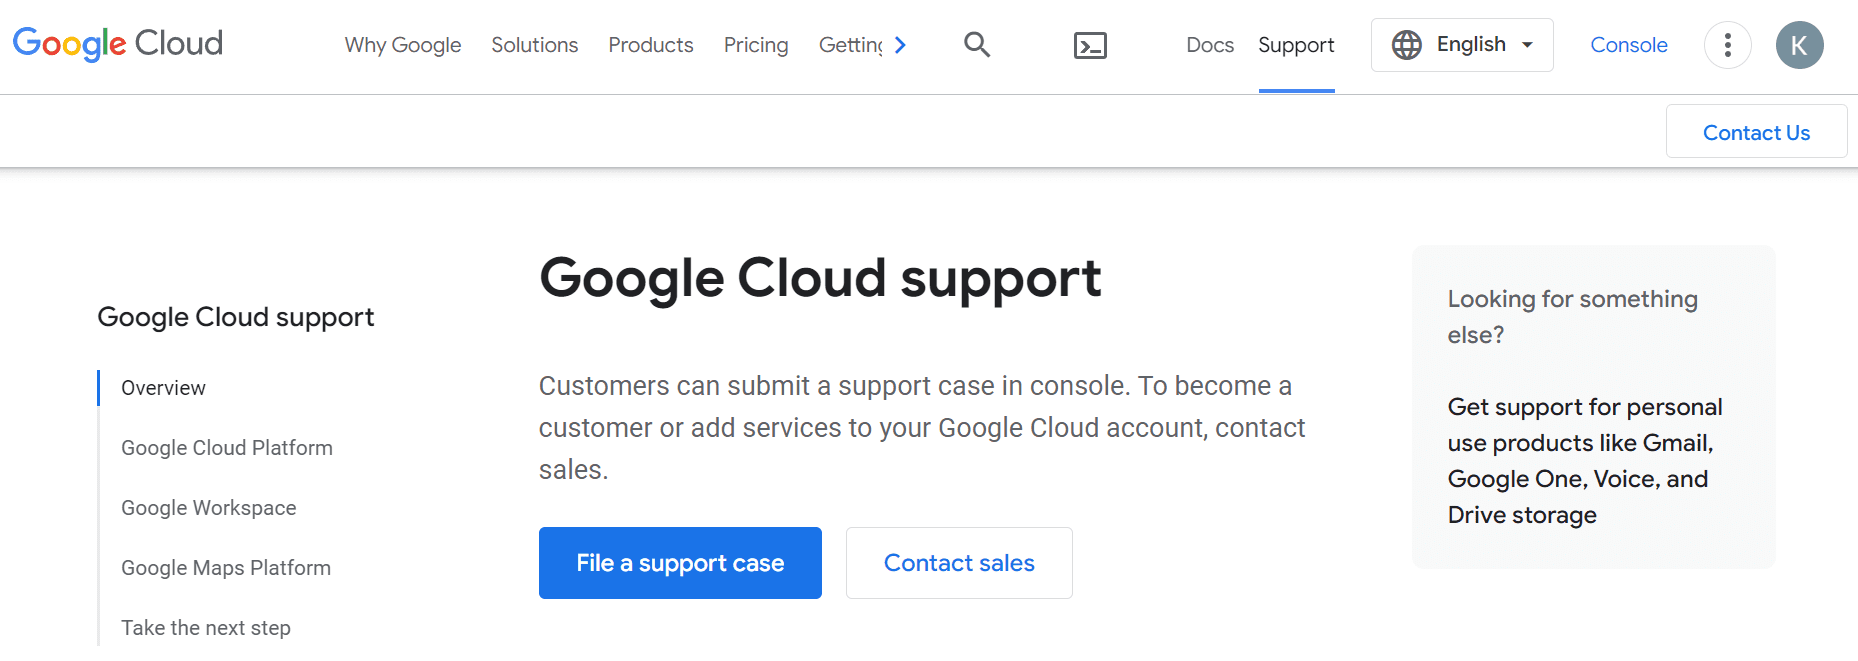 Google Cloud support.